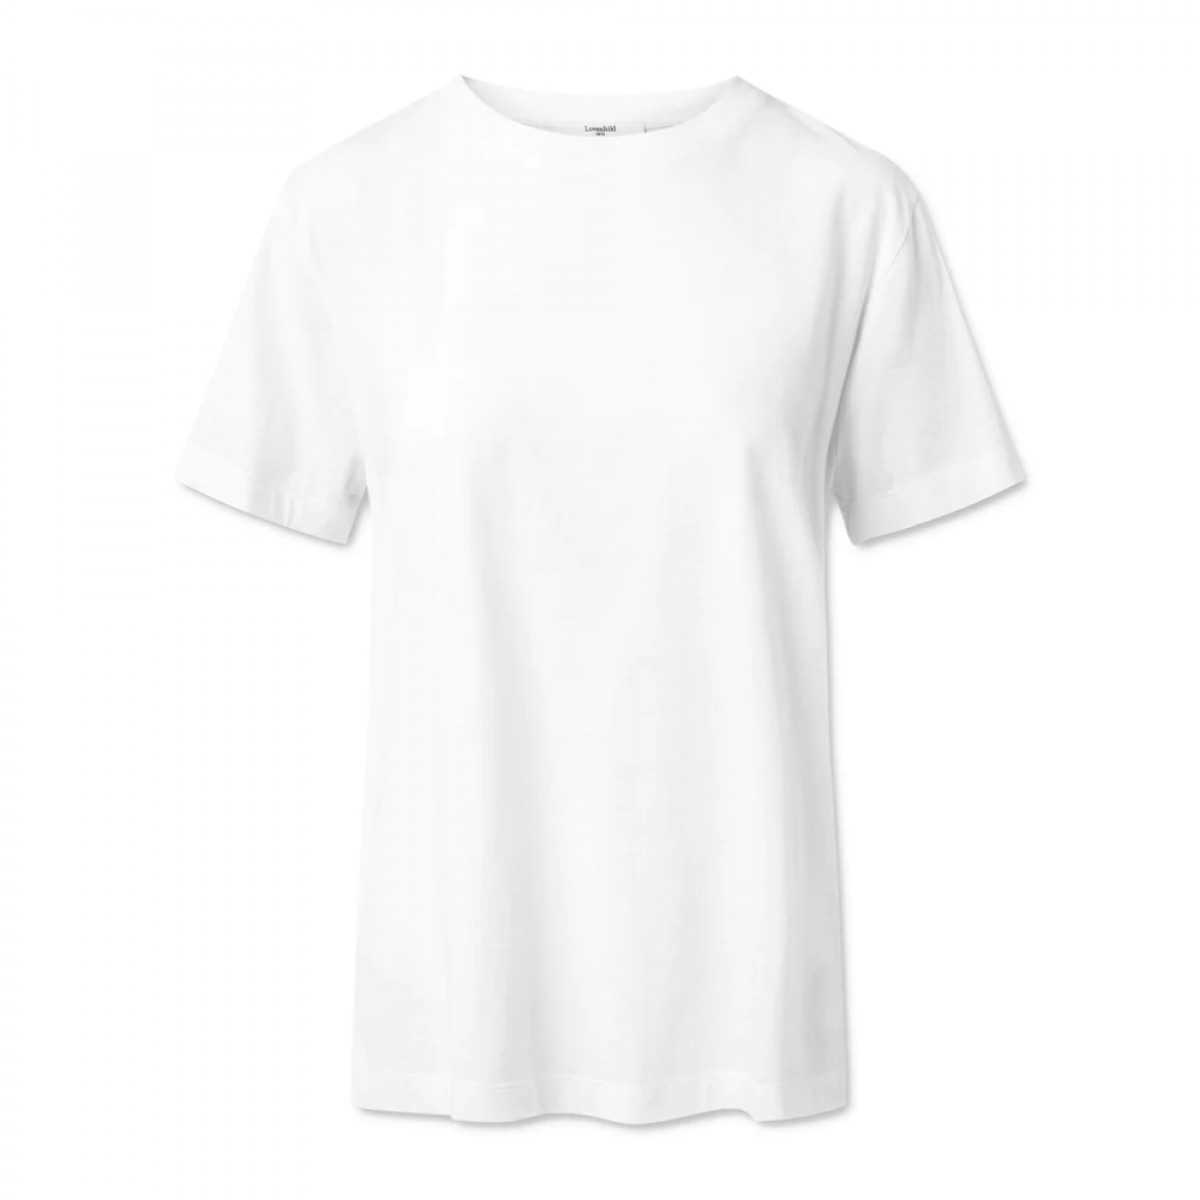 donna t-shirt - white - front